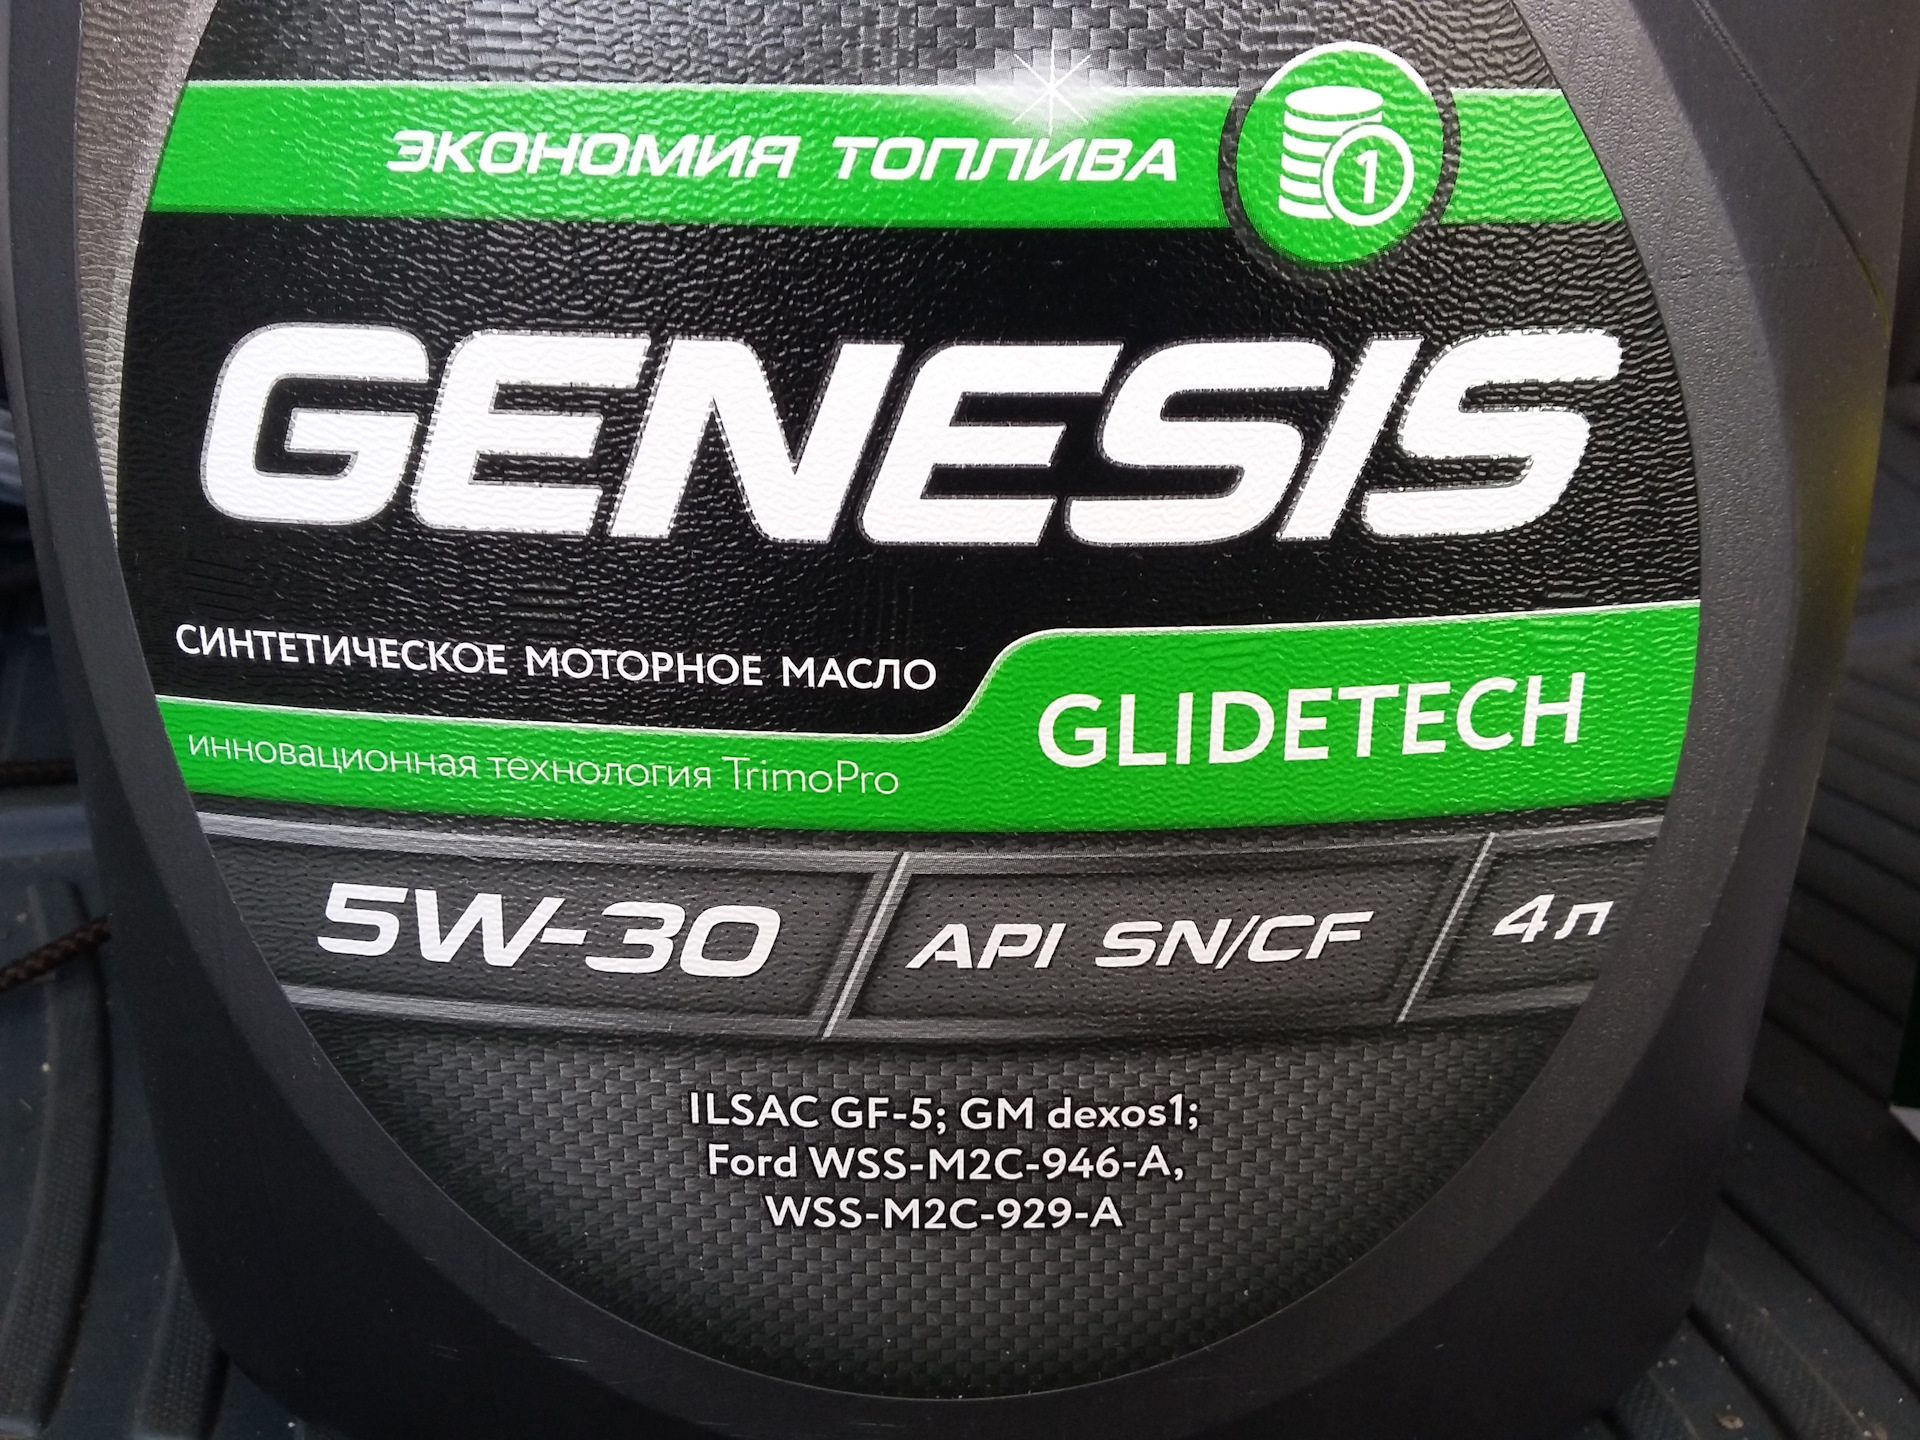 Лукойл генезис тесты. Lukoil Genesis glidetech 5w-30 (API SN, ILSAC gf-5). Genesis glidetech 5w-30. Лукойл Genesis glidetech. Лукойл Genesis Claritech 5w-30.